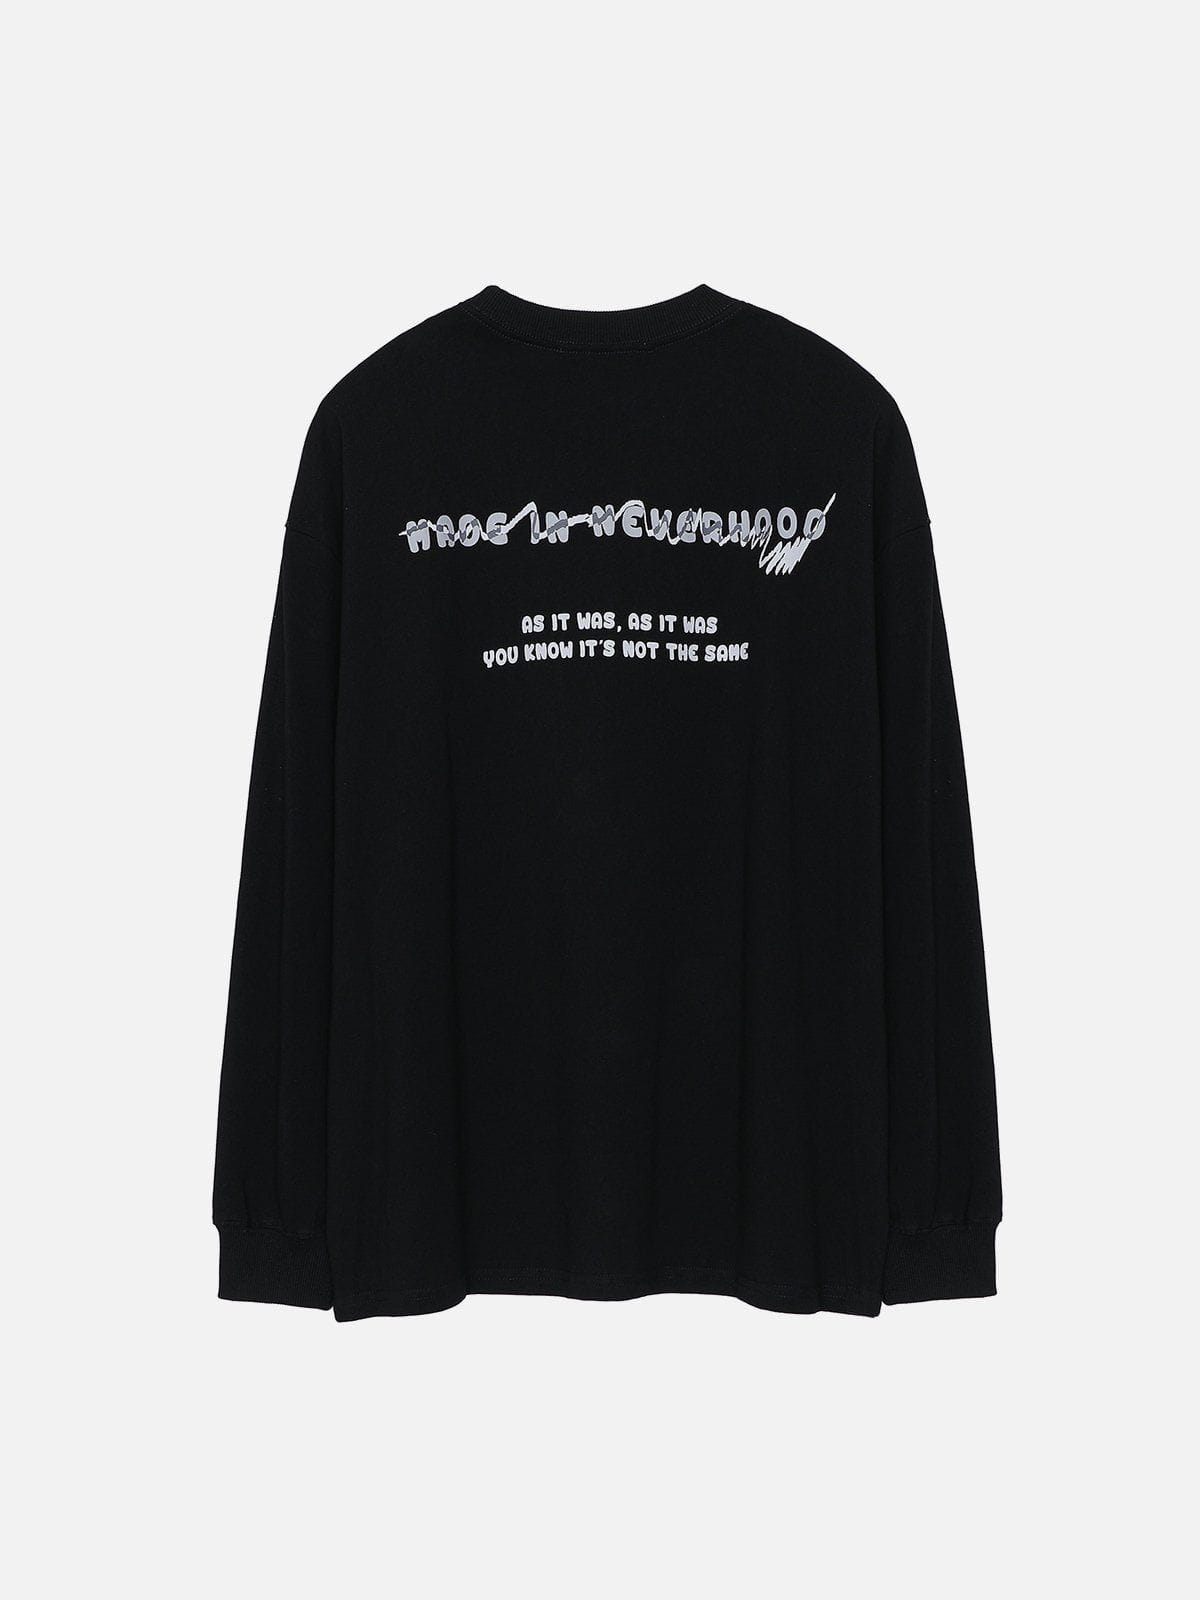 LUXENFY™ - Burnt Toast Print Sweatshirt luxenfy.com